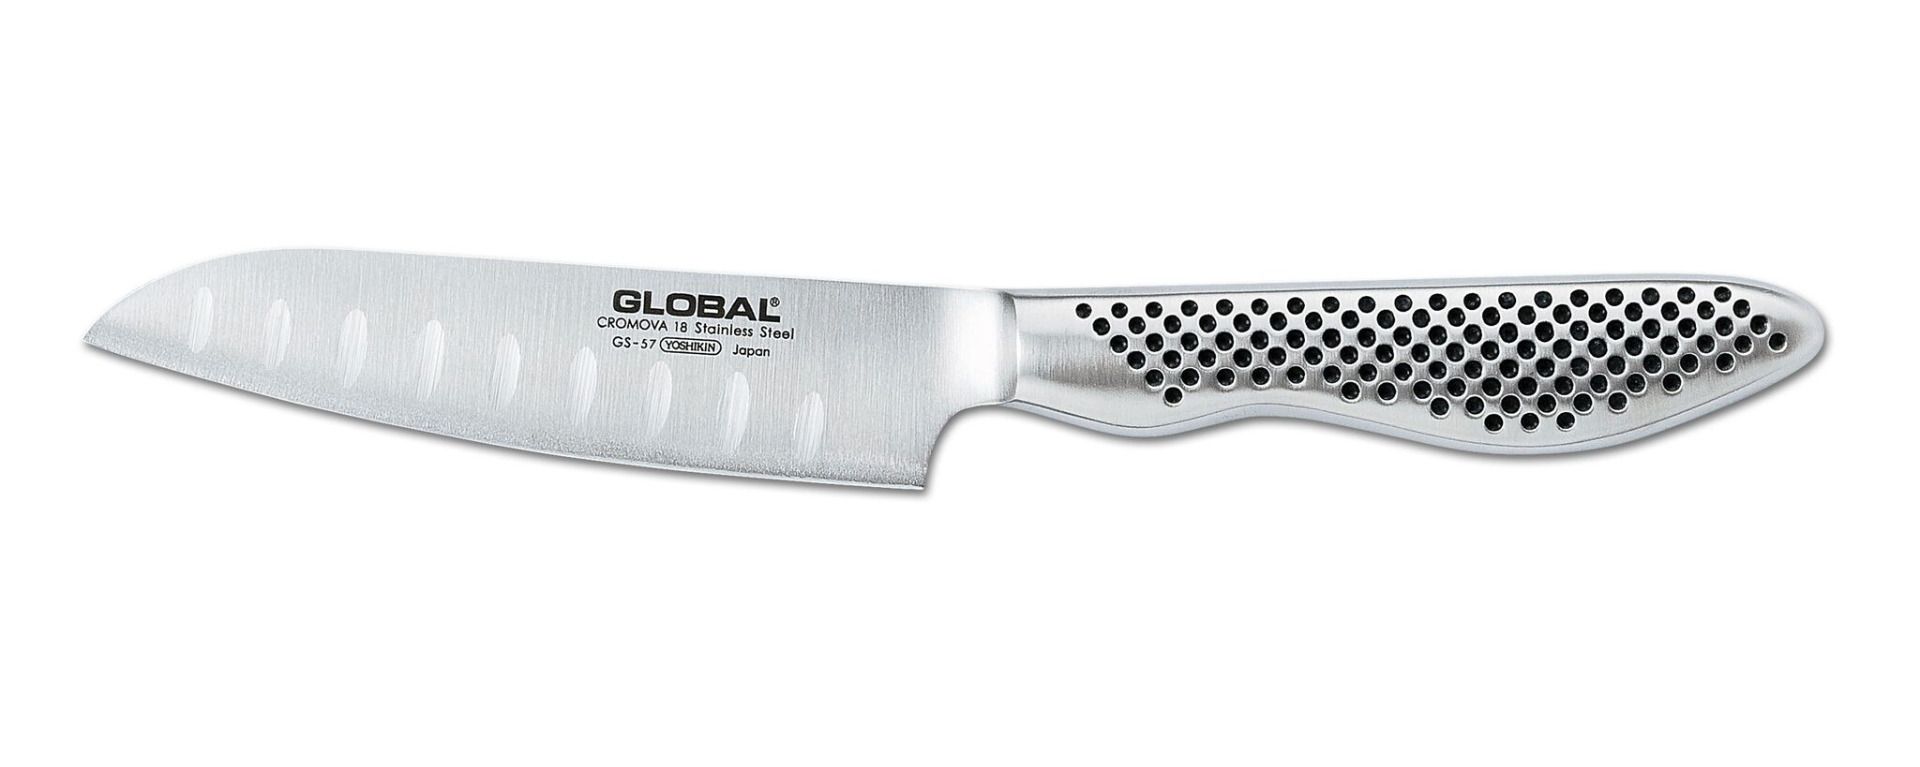 Global GS-57 4-inch Santoku Knife Hollow Ground